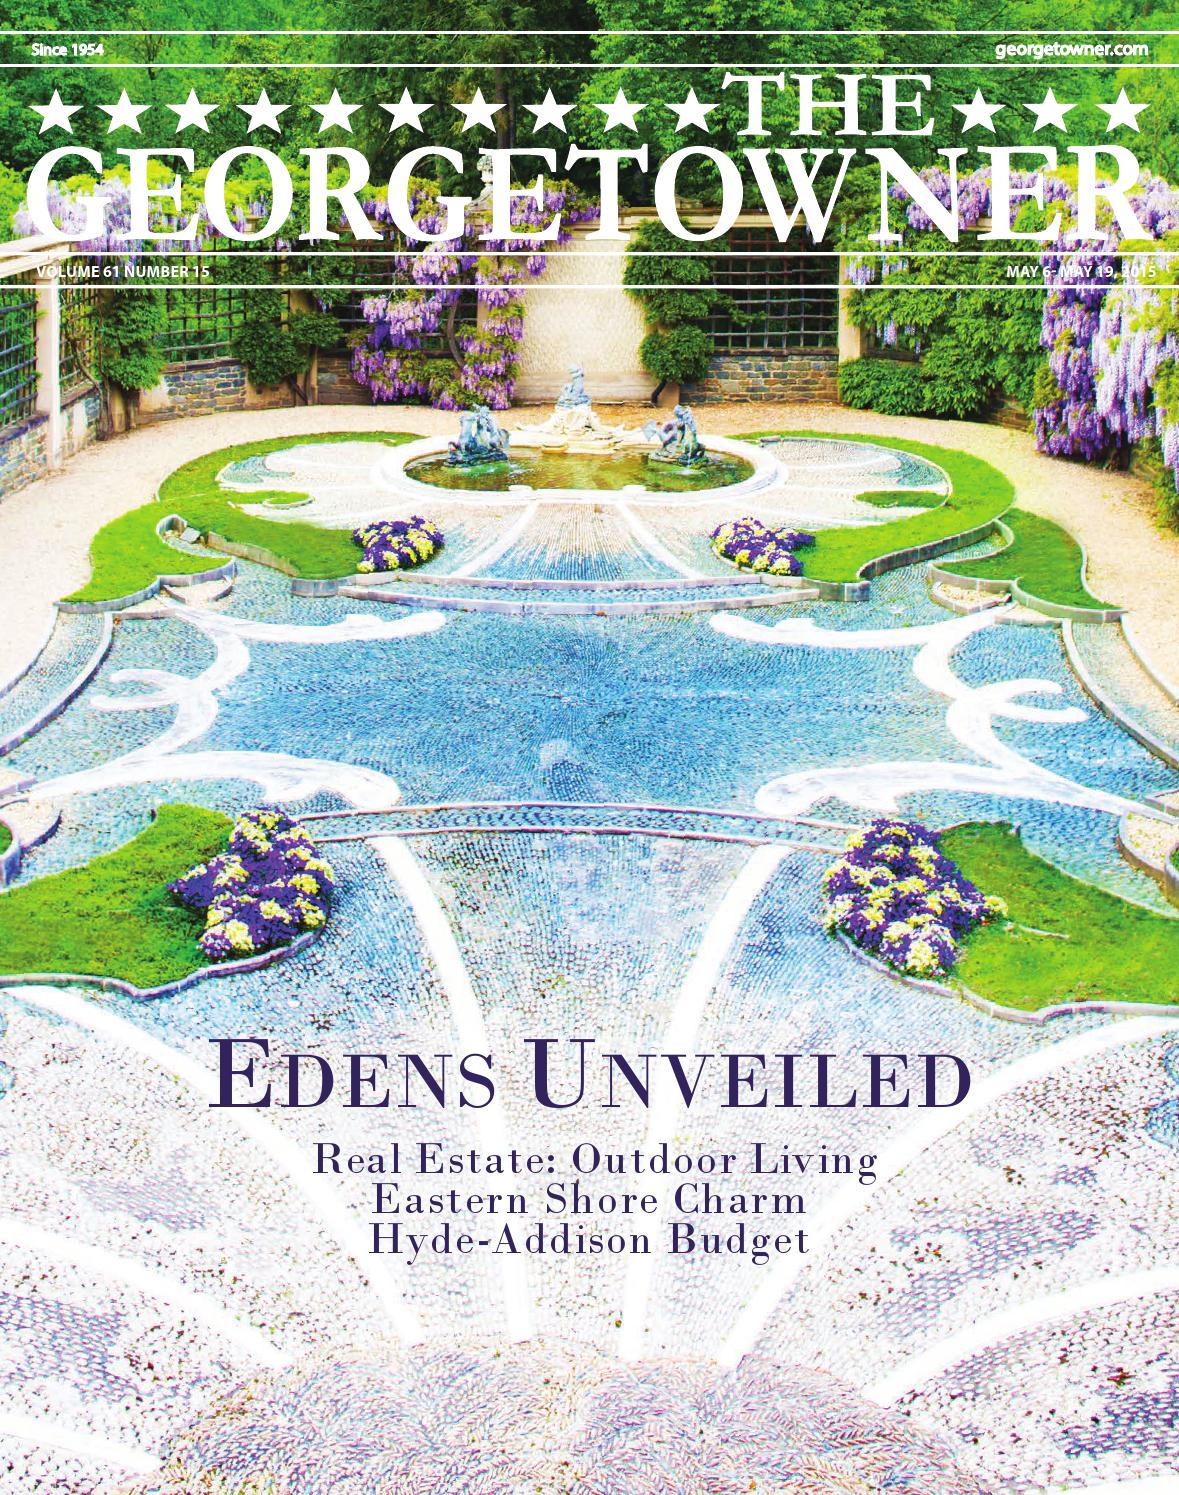 Garten Pavilion Einzigartig Geor Owner S May 6 2015 issue by Geor Own Media Group